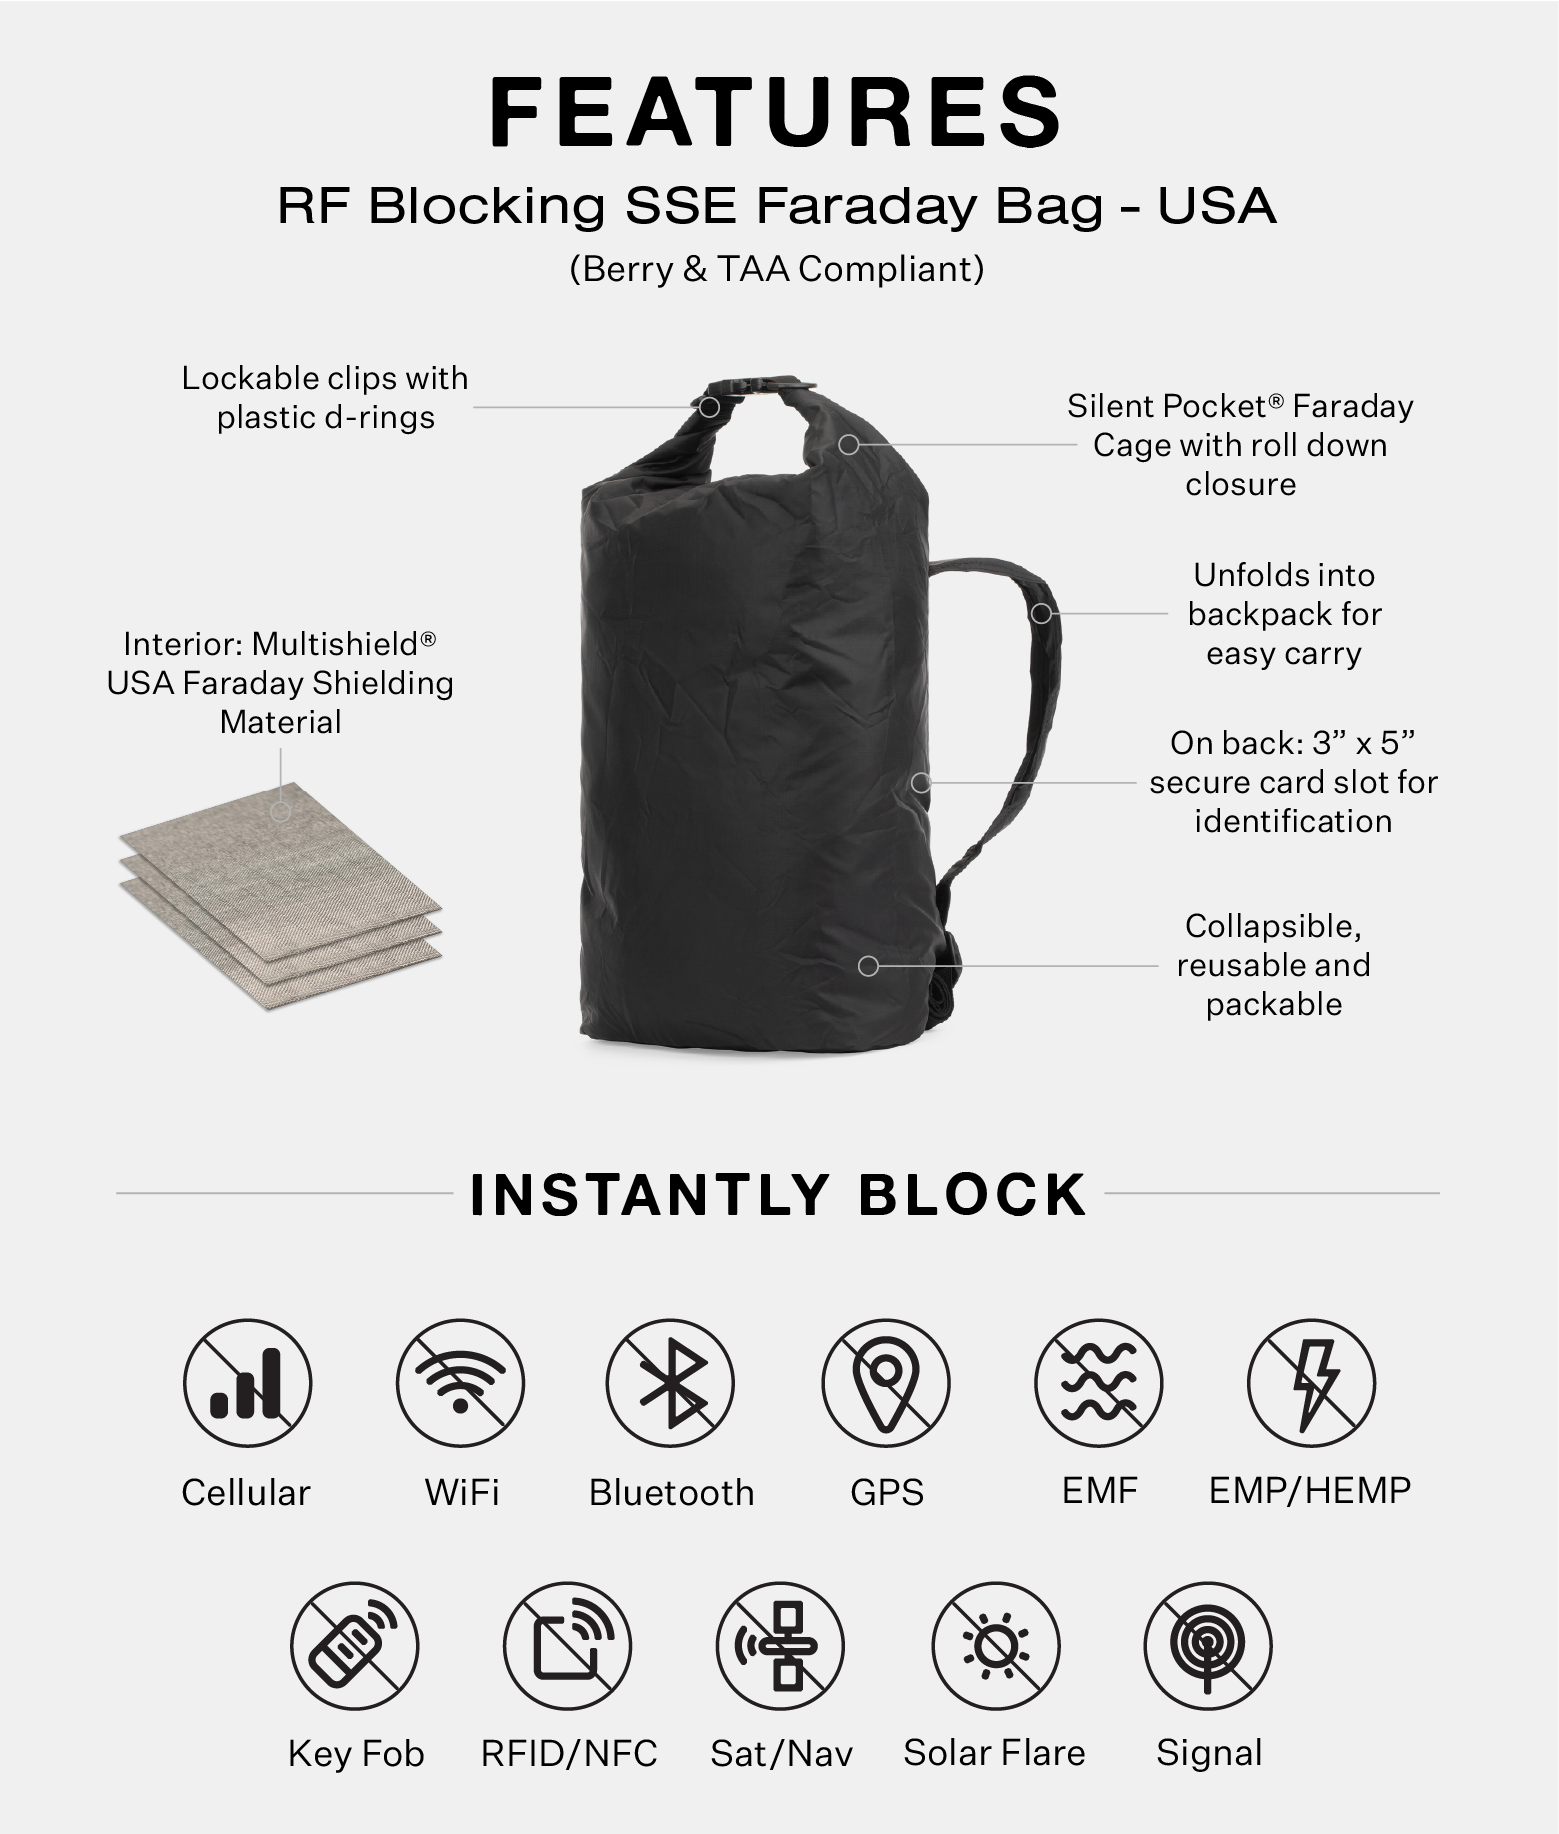 SLNT , RF Blocking SSE Faraday Bag - USA, USA Made, Faraday Cage